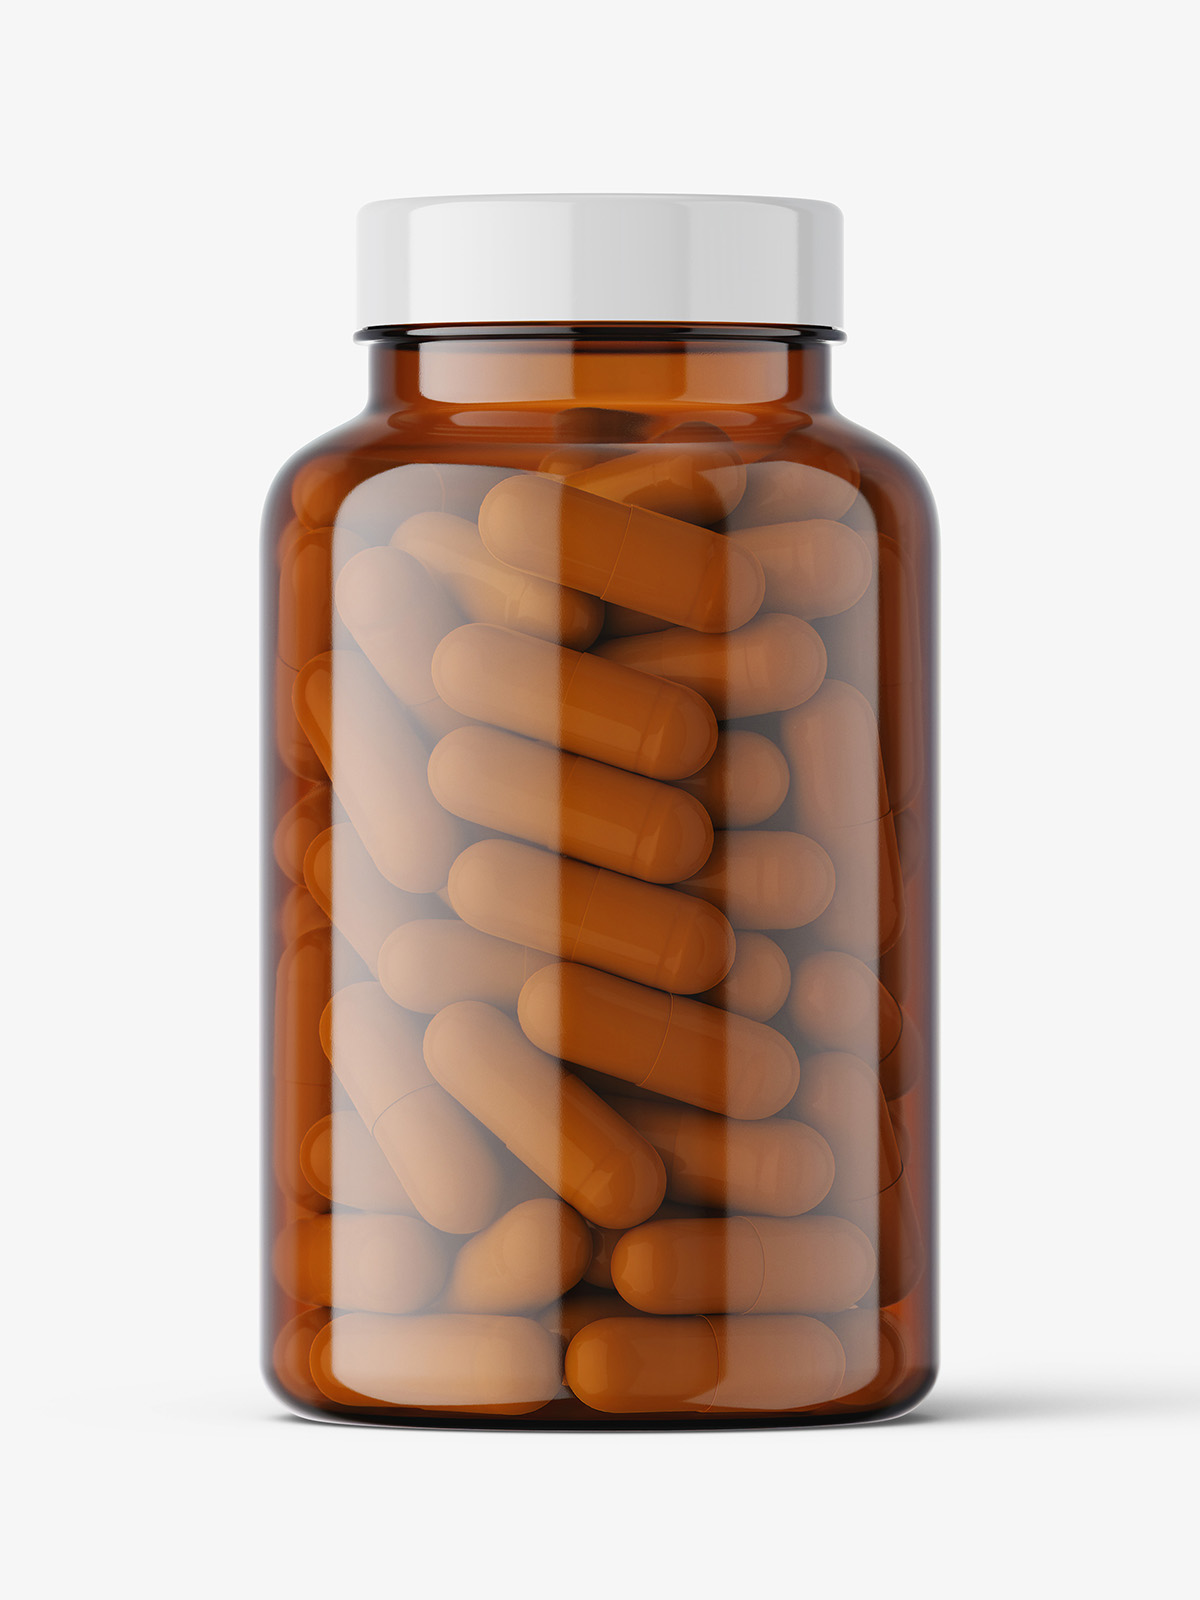 Download Jar with capsules mockup / amber - Smarty Mockups